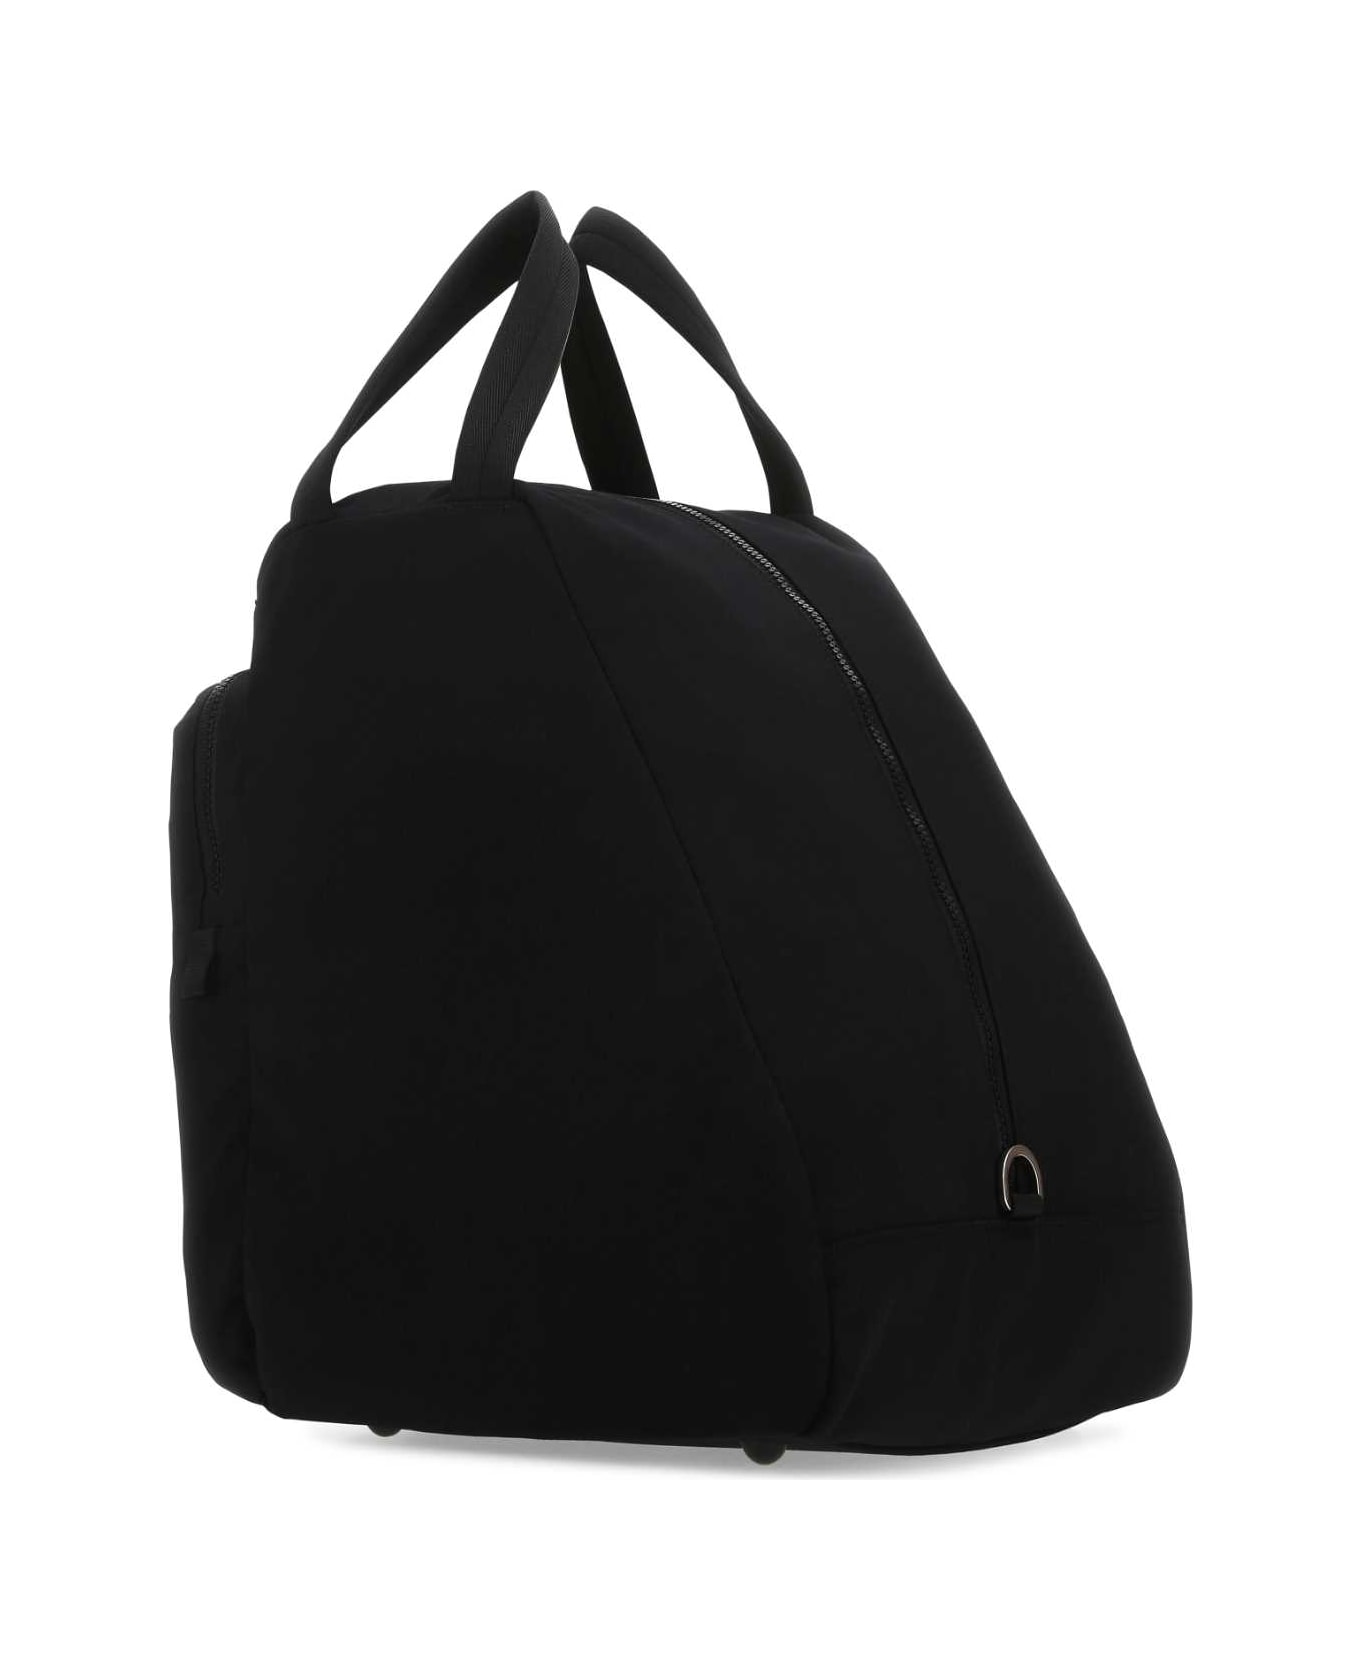 Prada Black Canvas Travel Bag - NERO トラベルバッグ